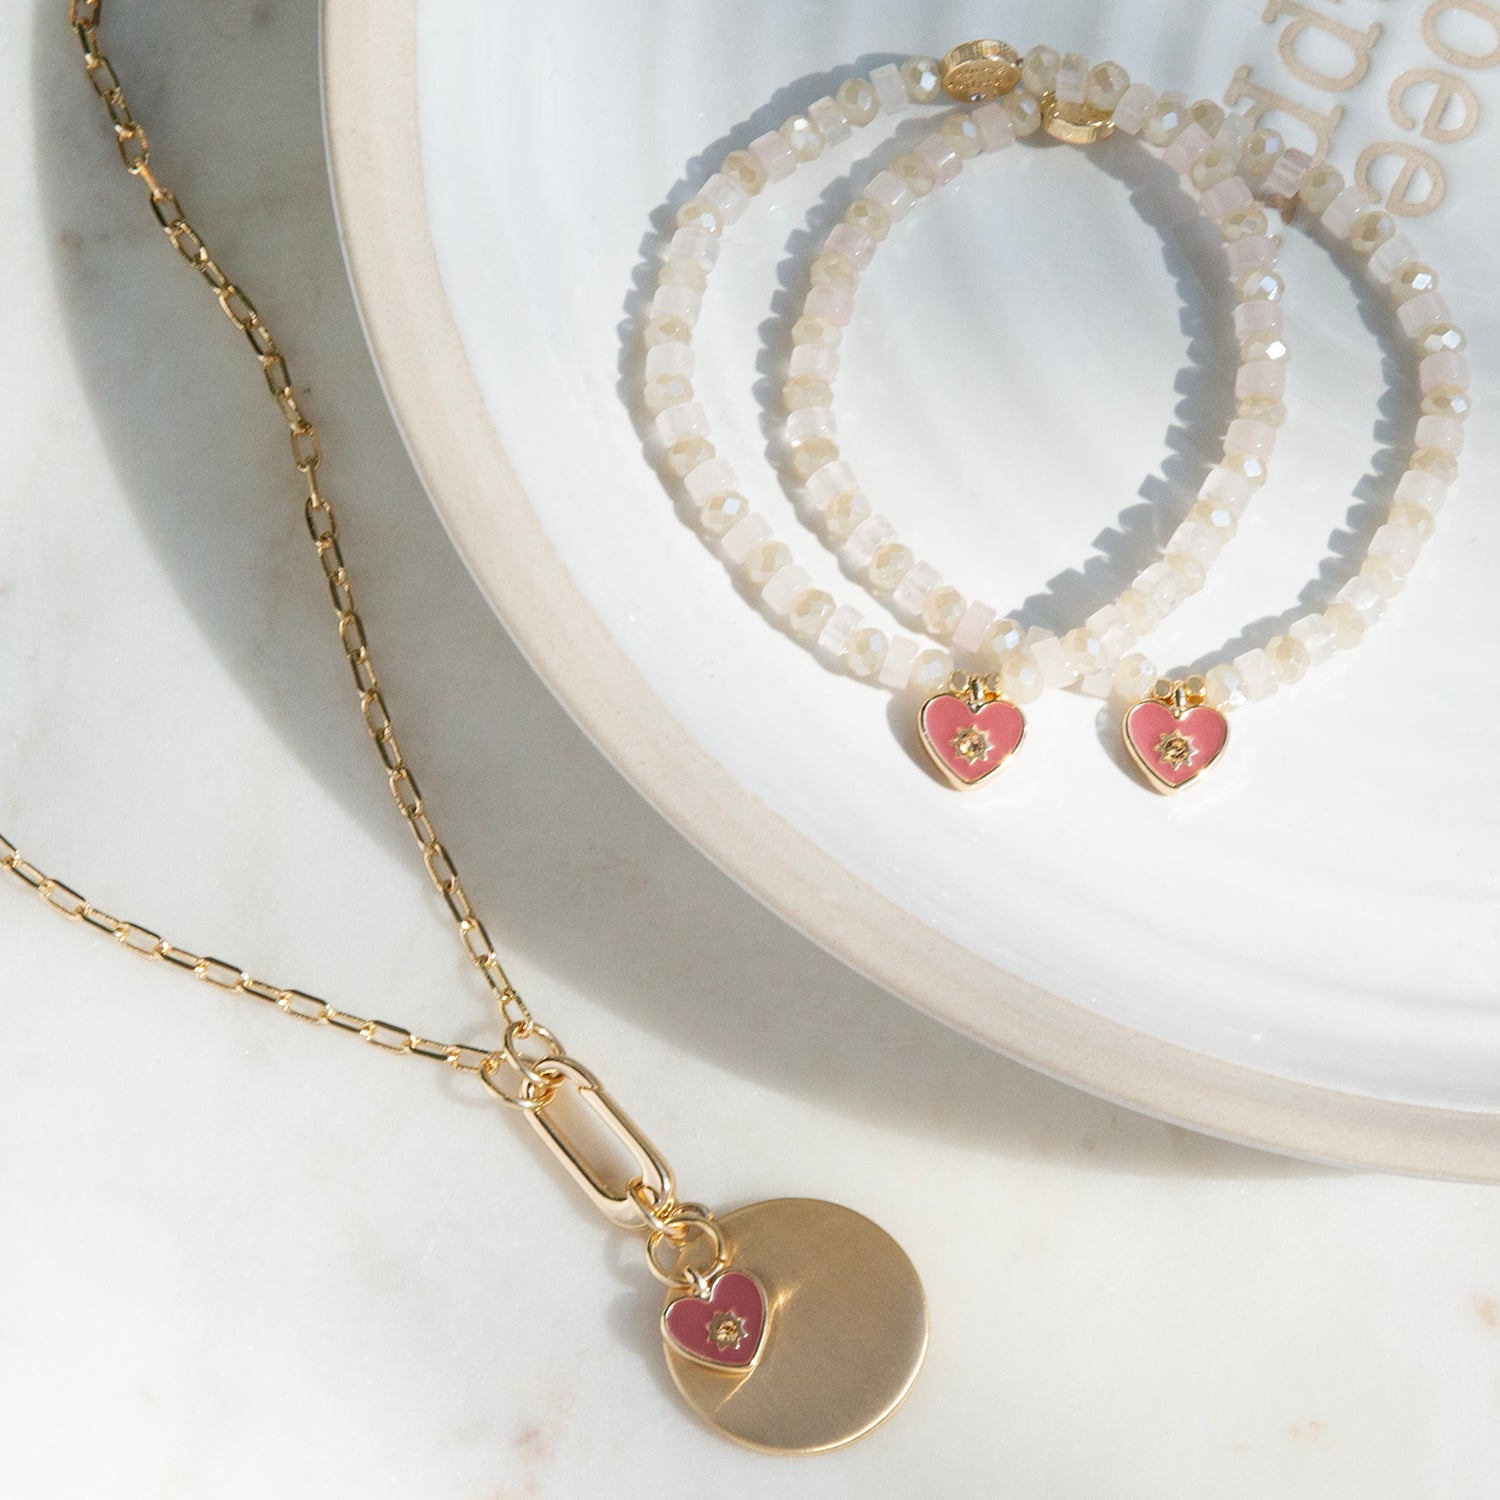 pink heart multi bead stretch bracelet